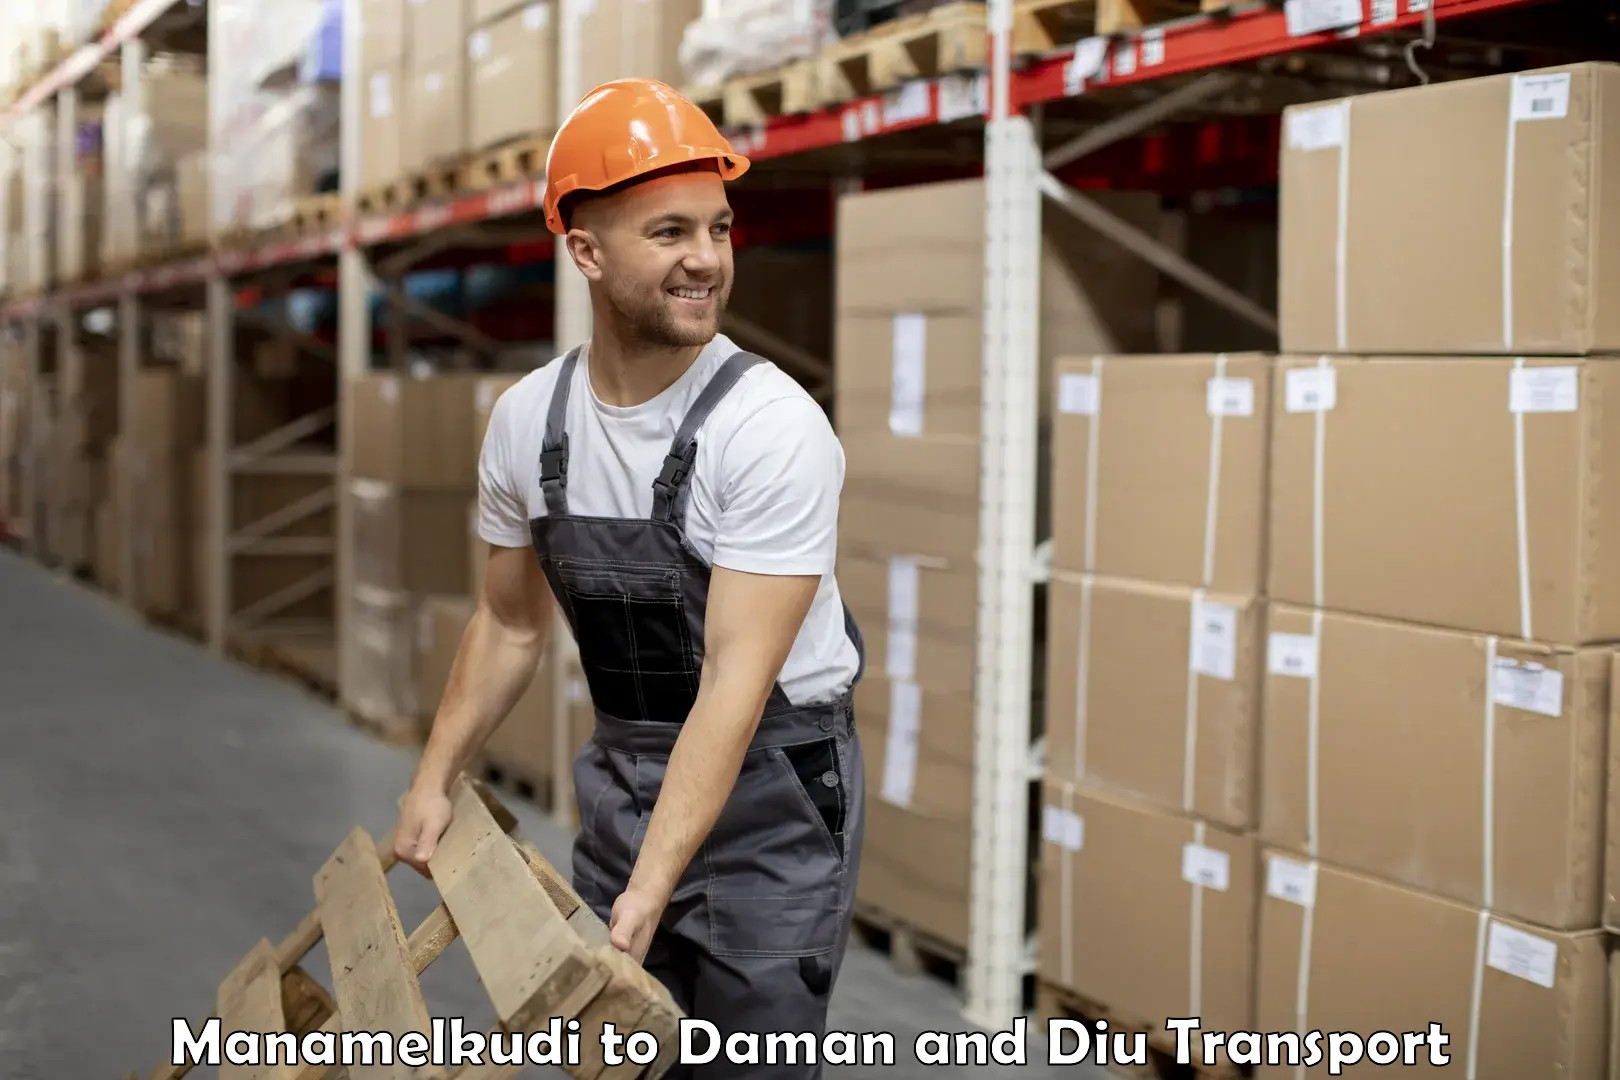 Goods delivery service Manamelkudi to Daman